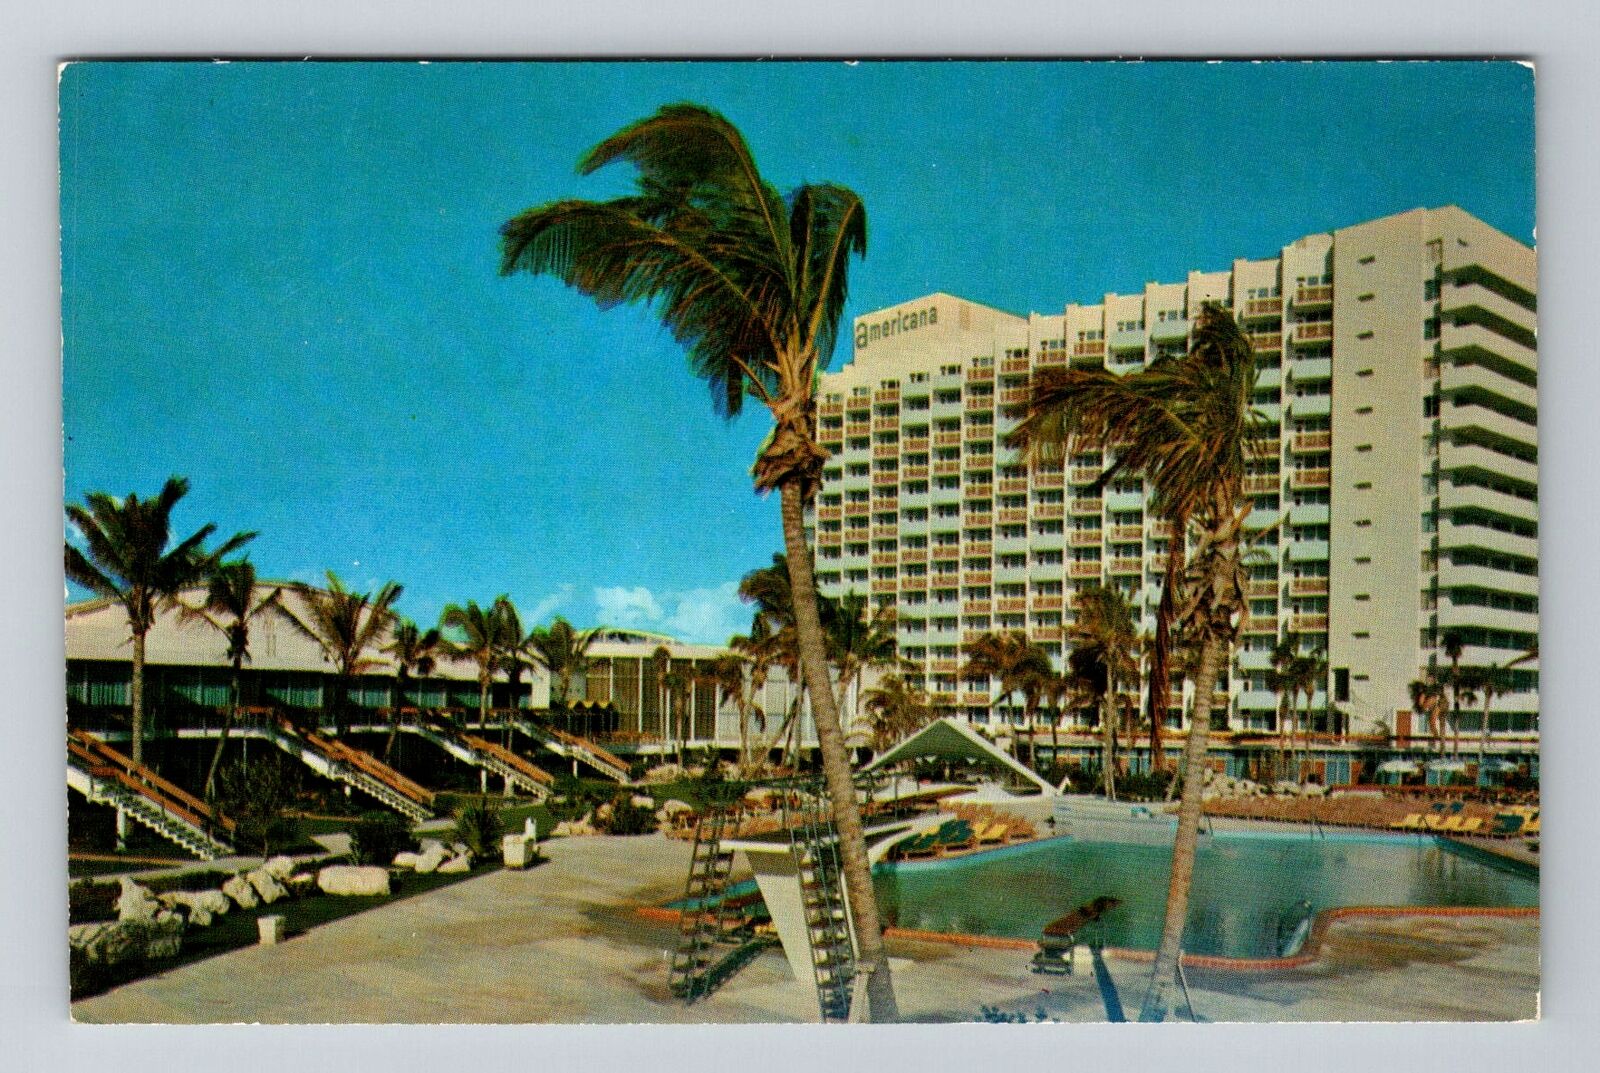 Miami FL-Florida, Americana Hotel and Pool, Vintage Postcard